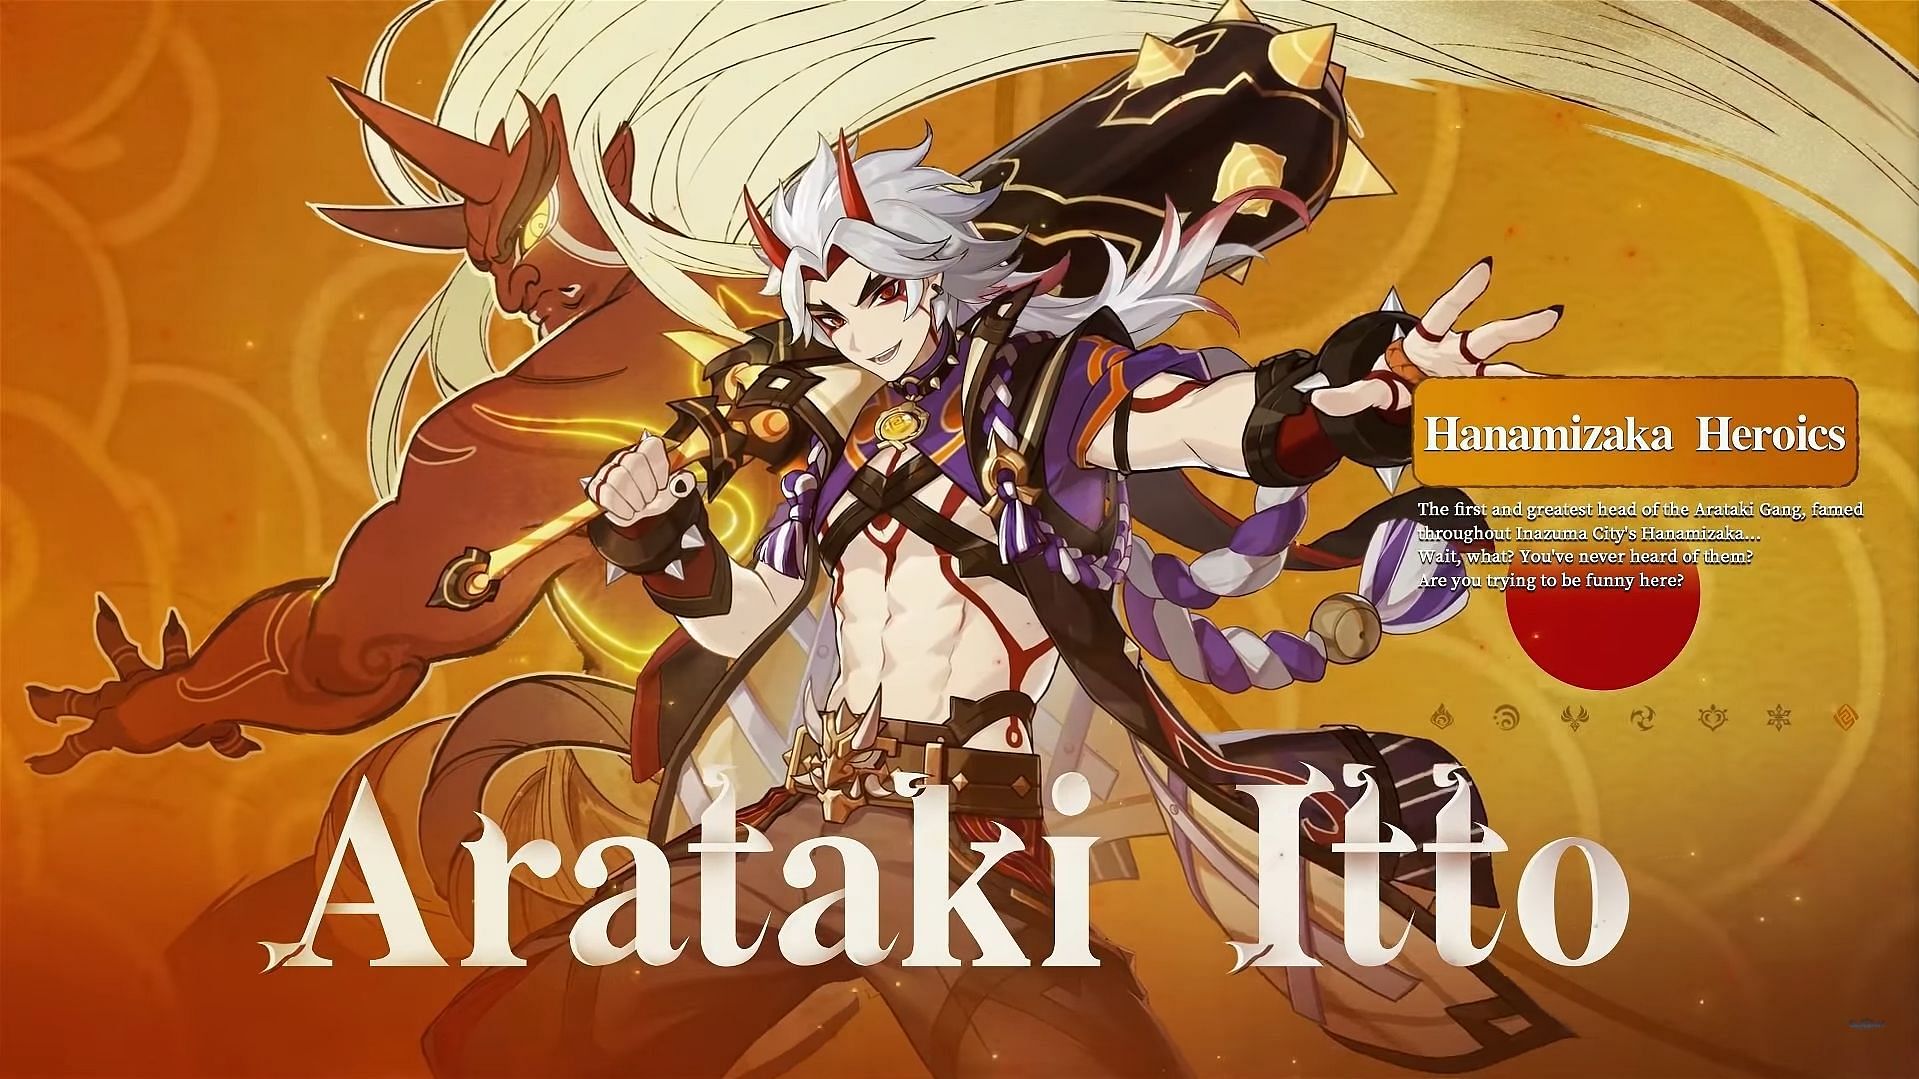 Arataki Itto will be added to Genshin Impact in the next event banner (Image via Genshin Impact)